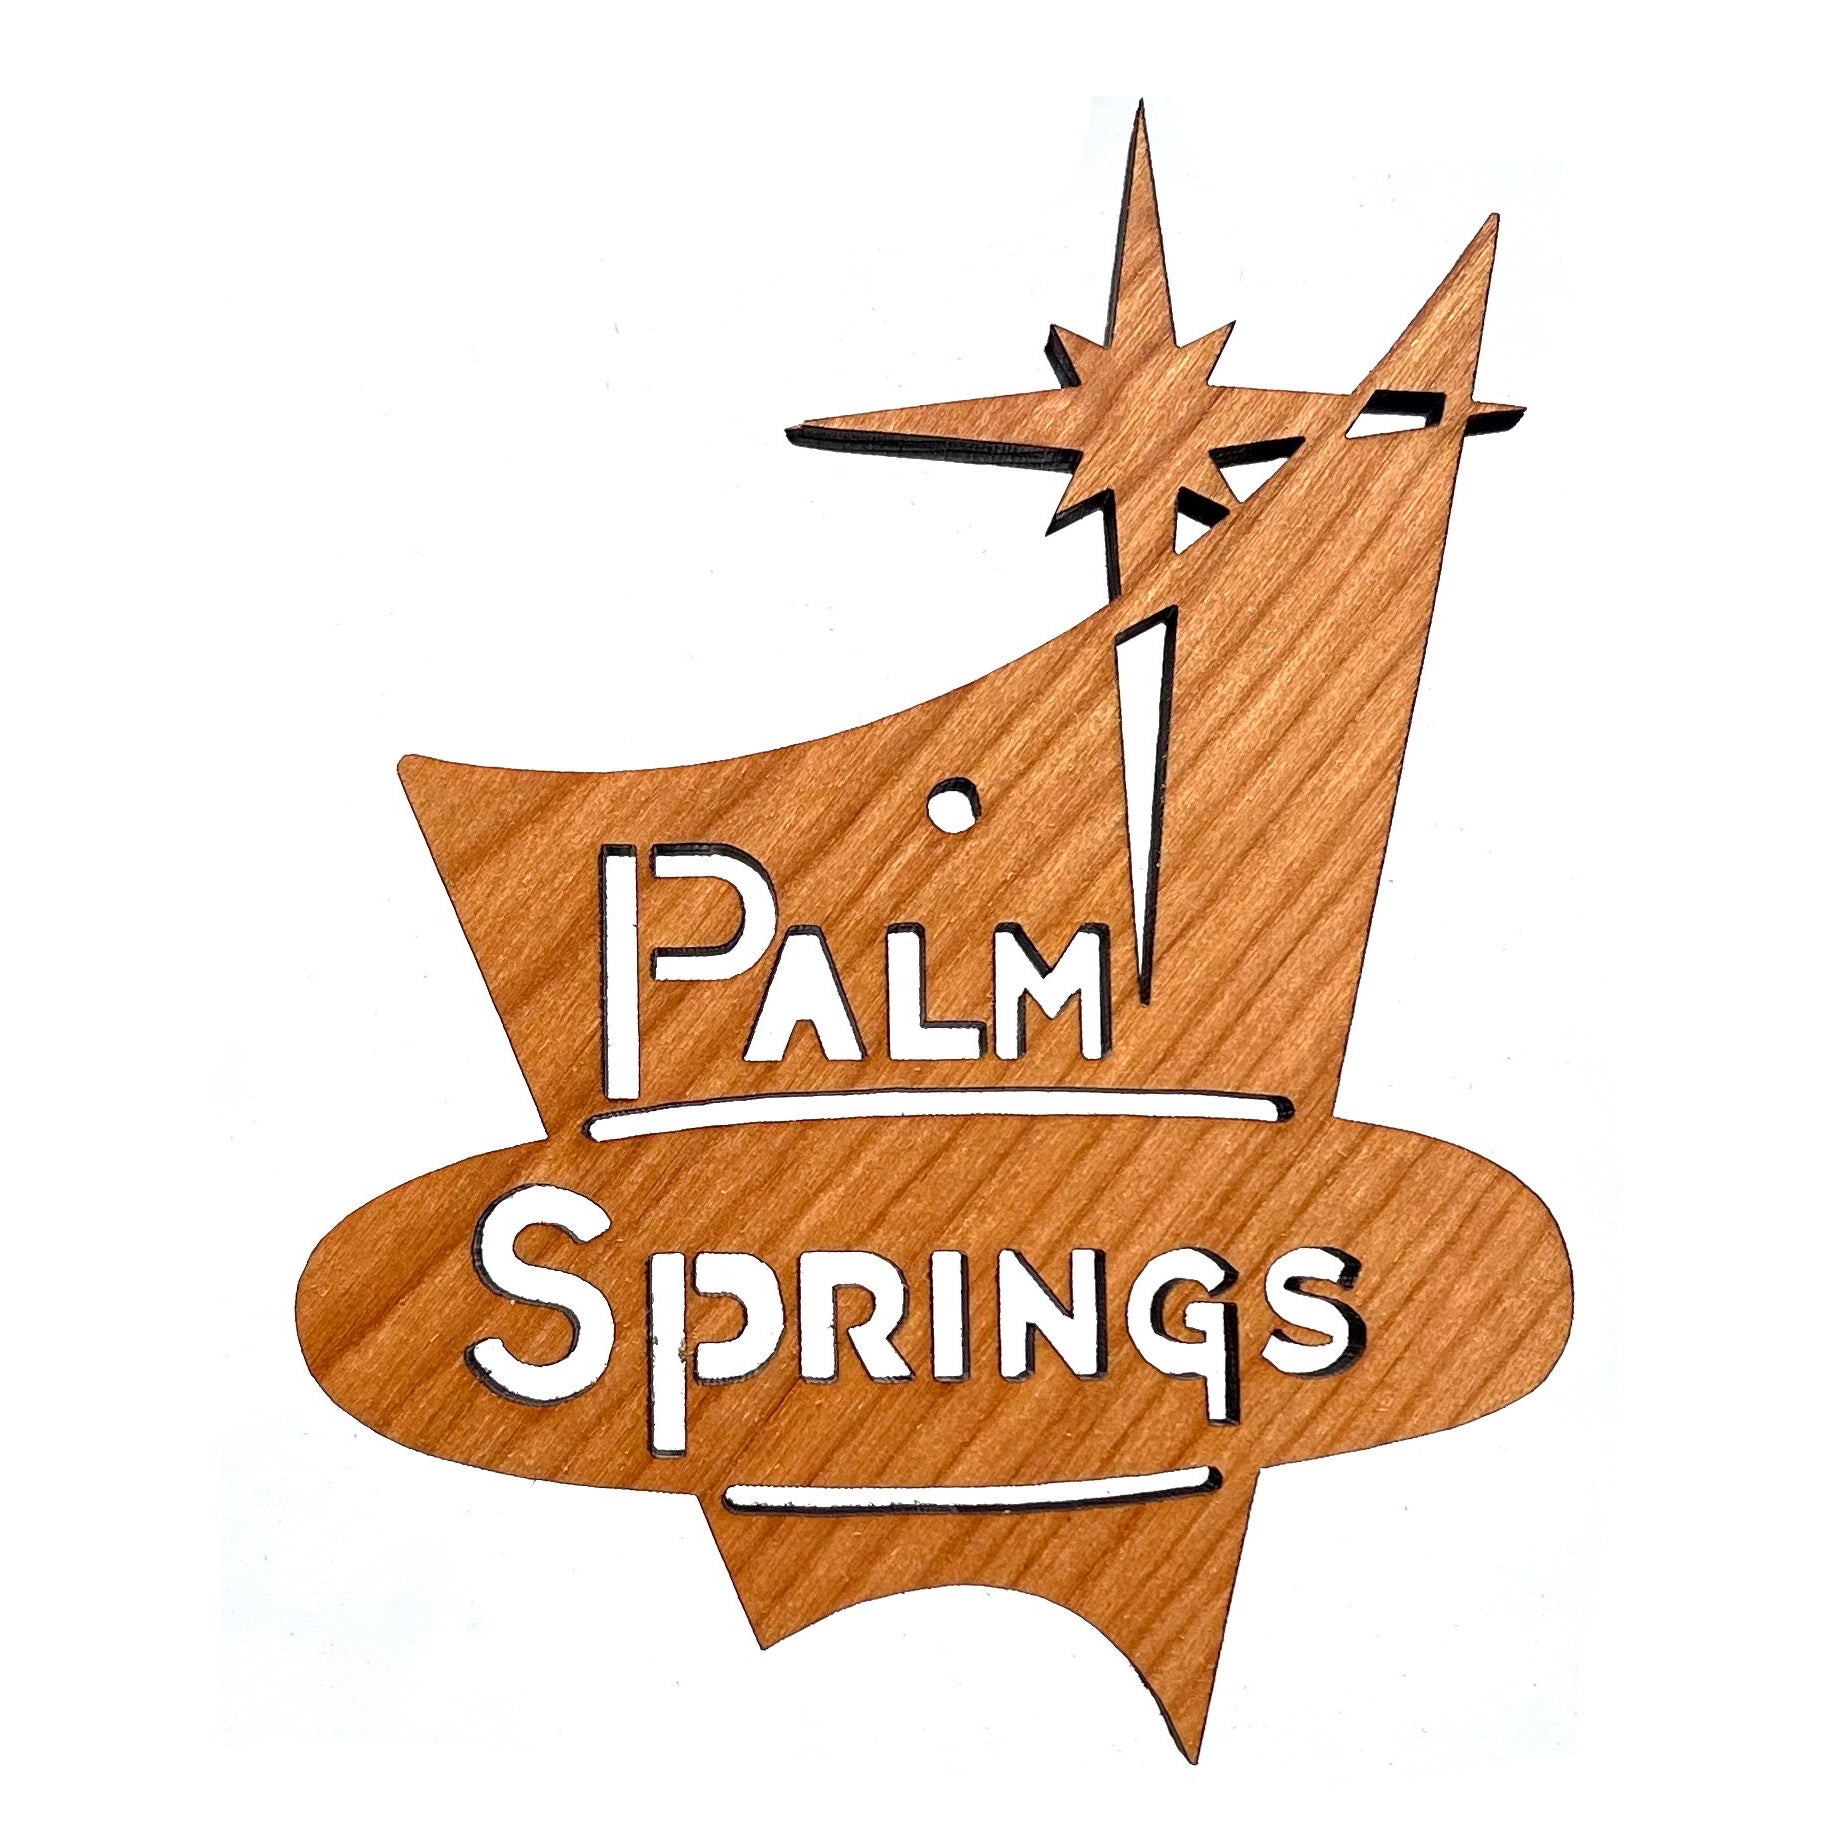 Frederick Arndt Wooden Ornaments - Palm Springs Star - Destination PSP